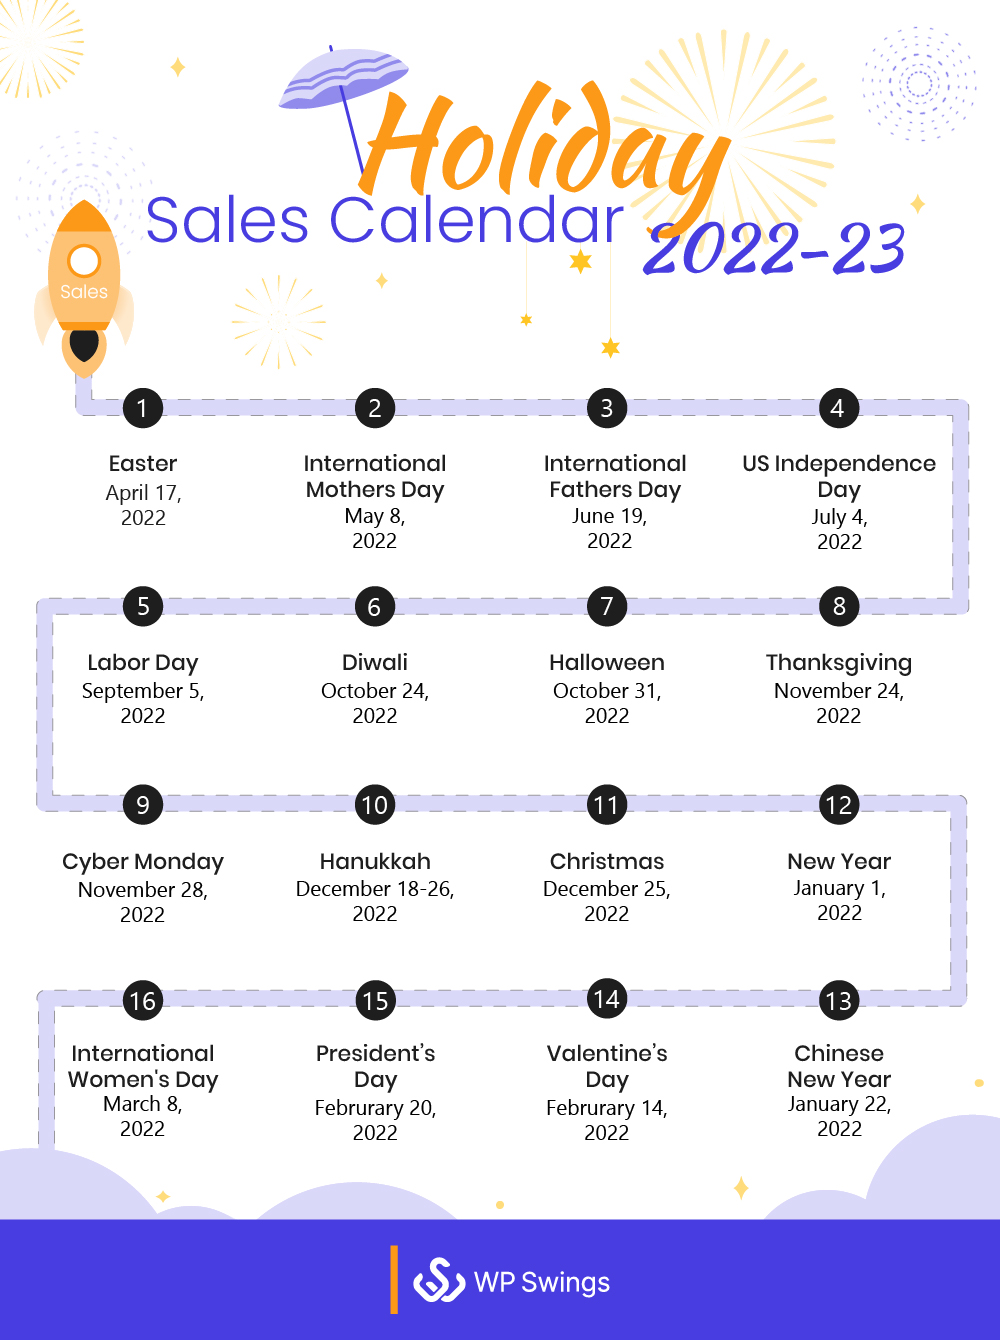 Holiday sales calendar